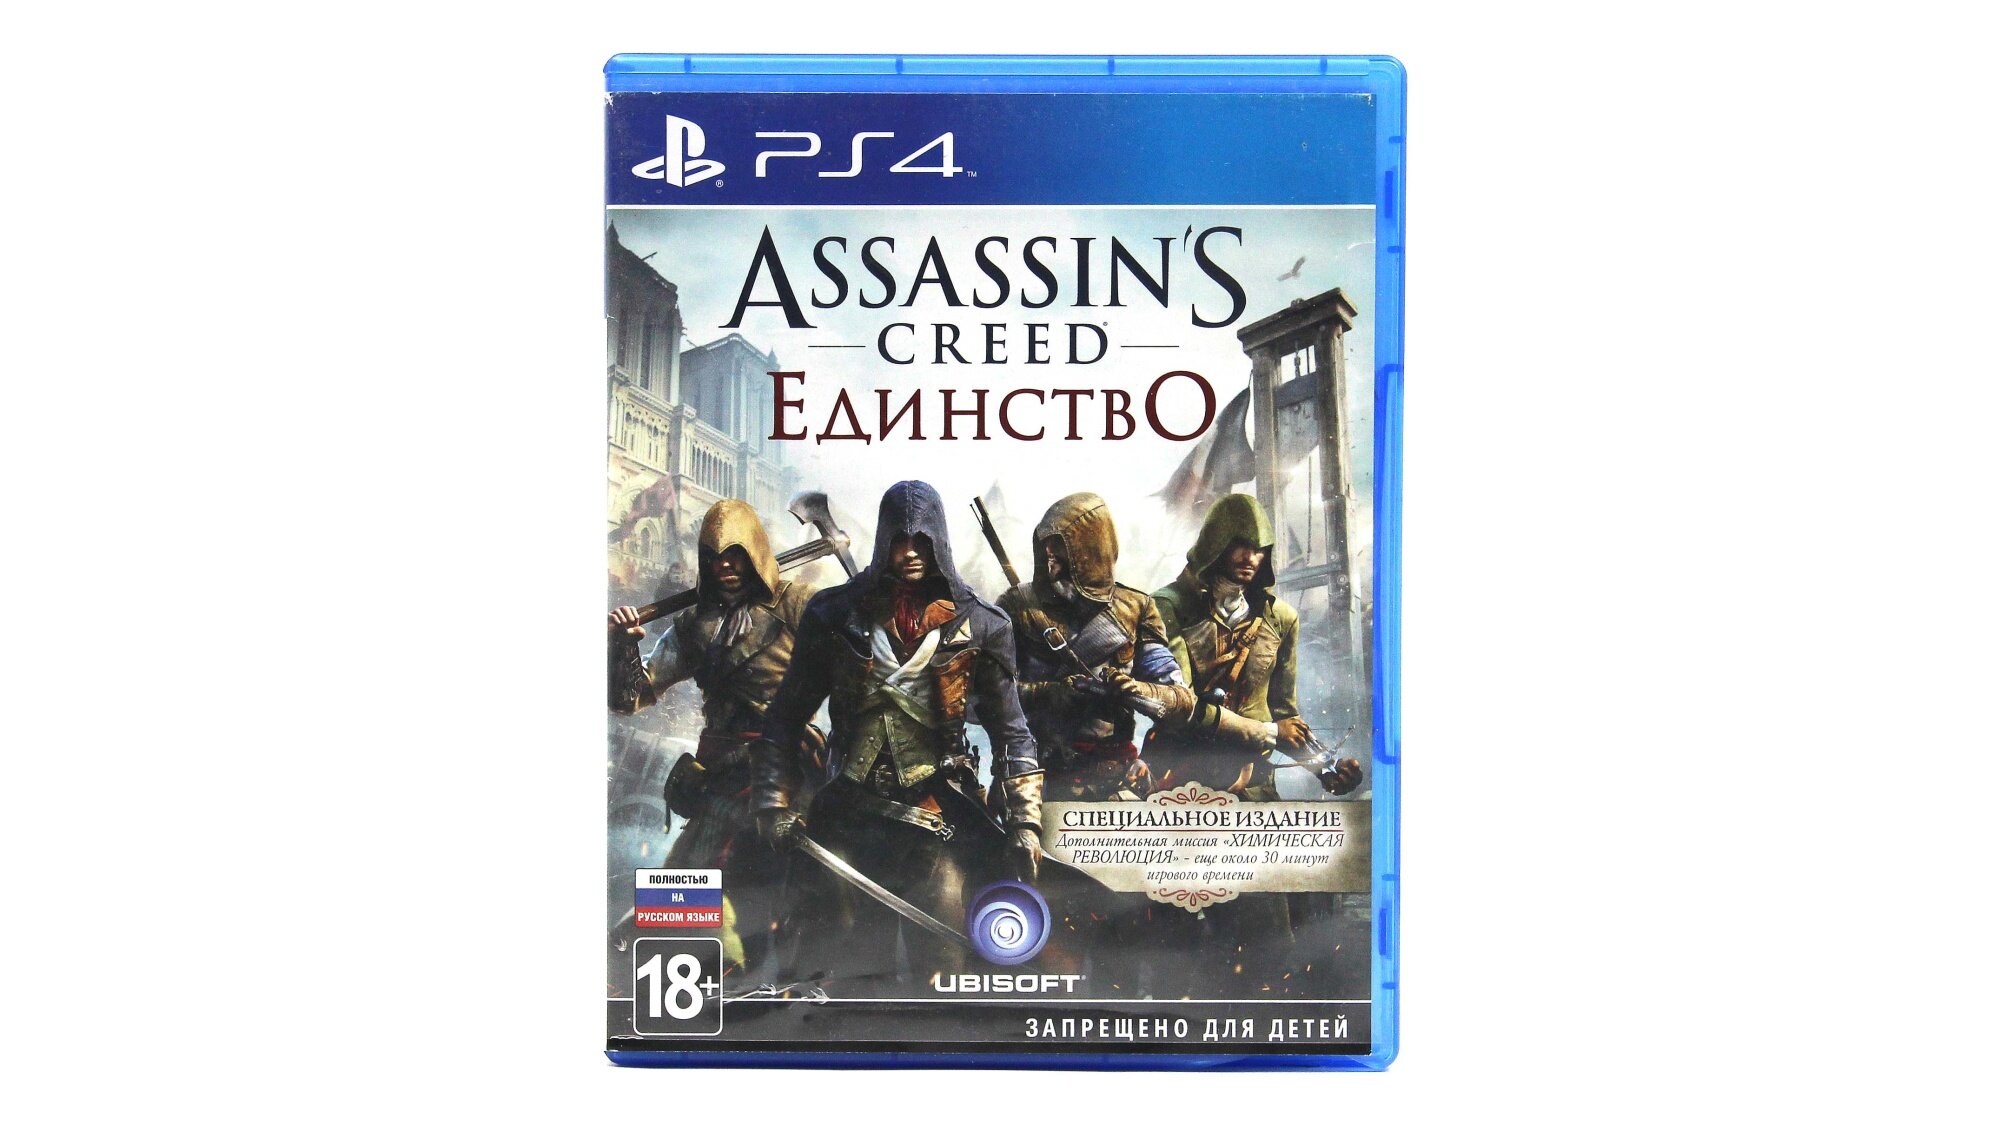 Assassin's Creed Единство (PS4, Русский язык)